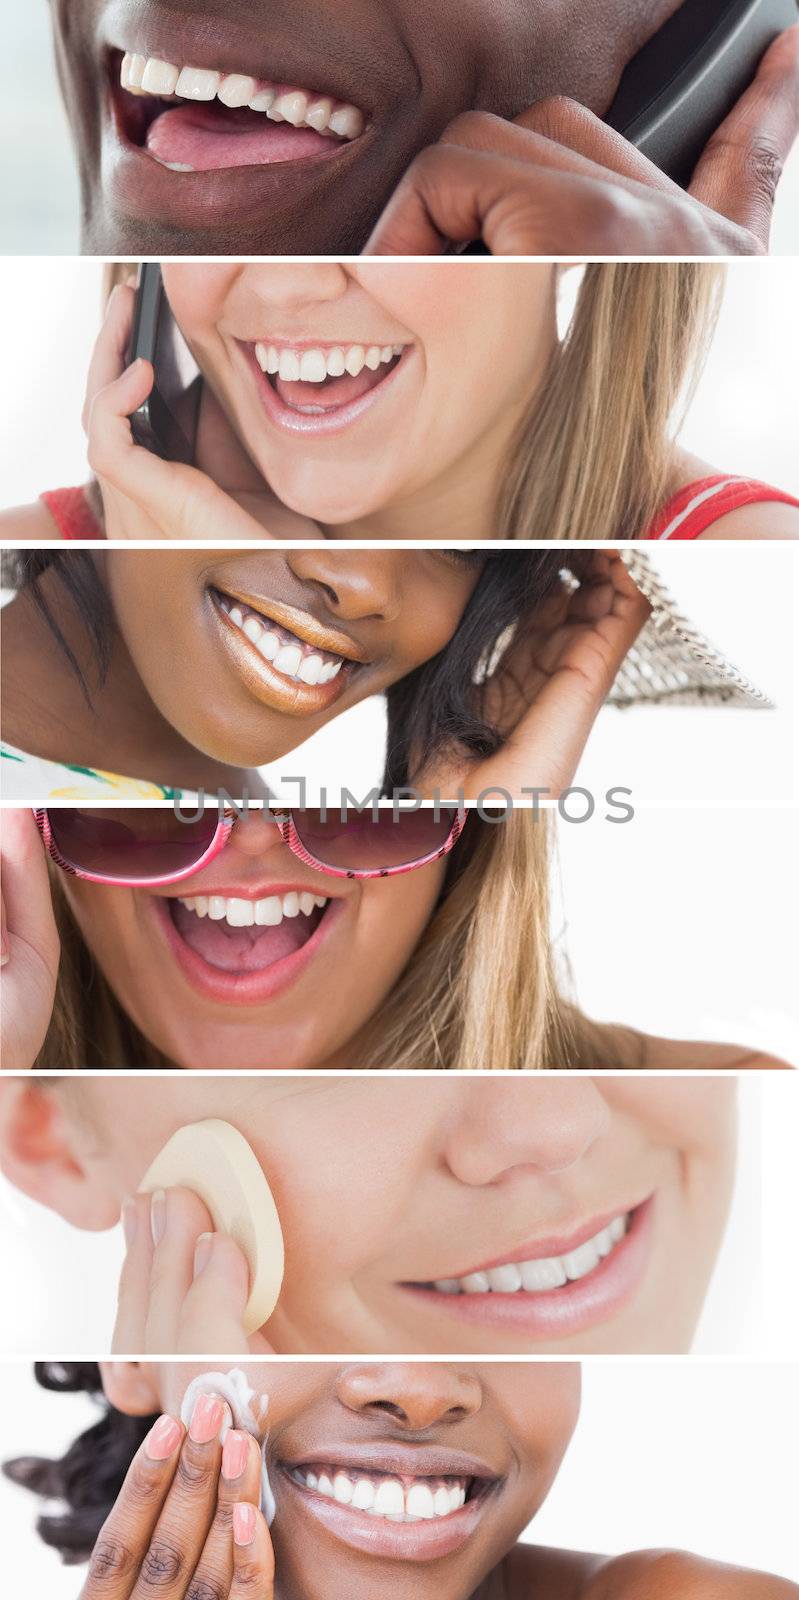 Dental care collage by Wavebreakmedia